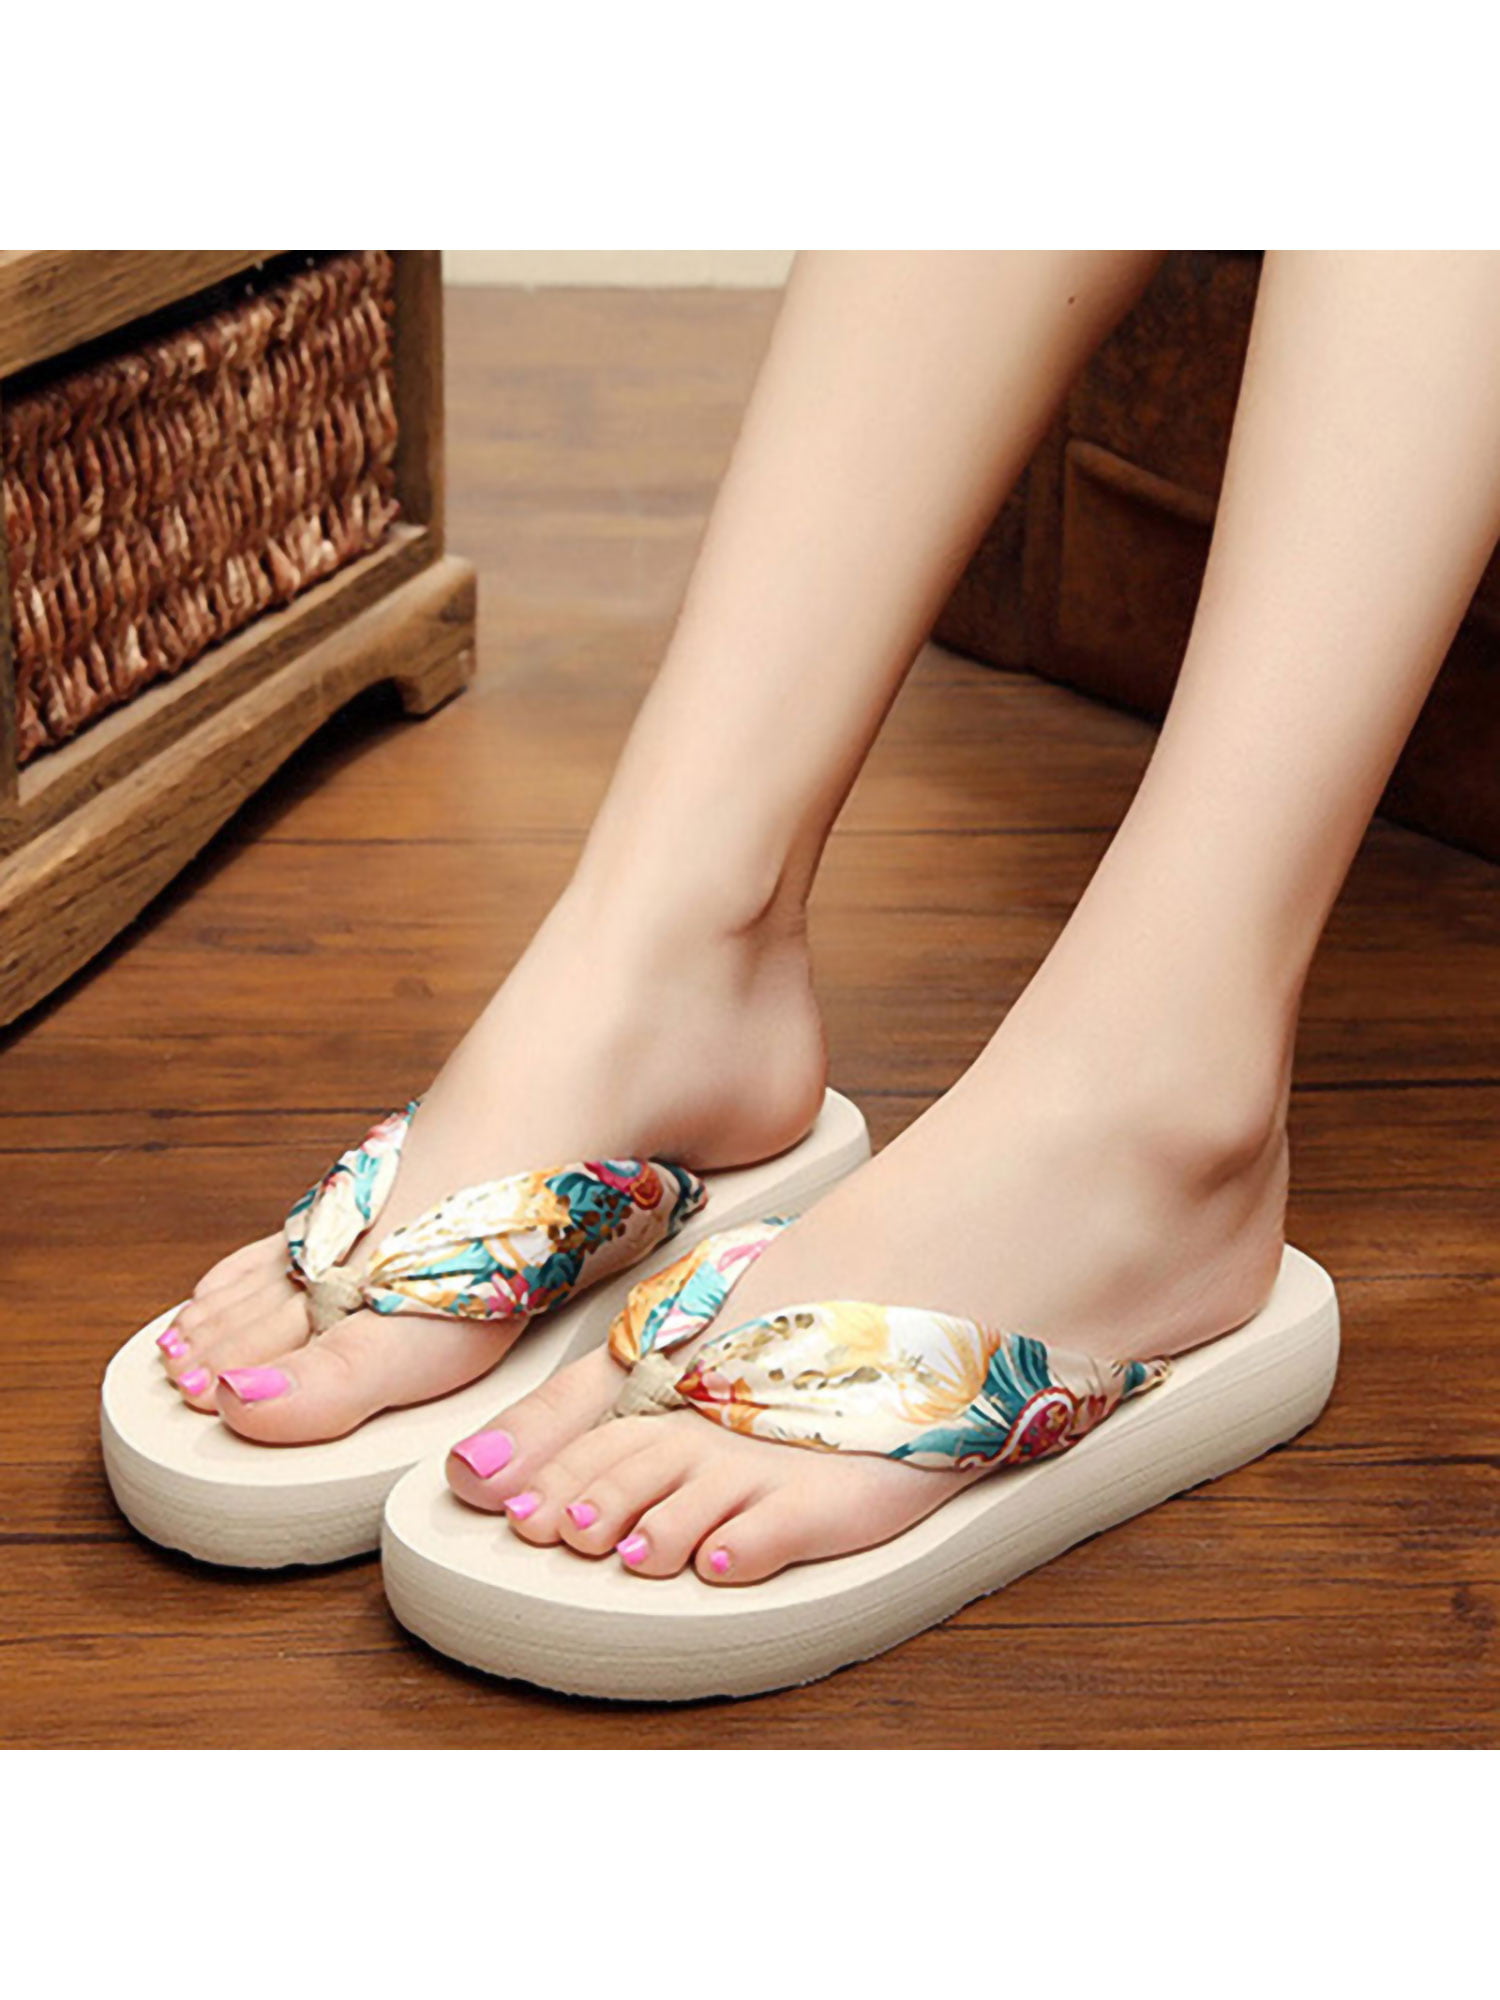 Unisex Summer Beach Slippers Space Girl Illustrator Flip-Flop Flat Home Thong Sandal Shoes